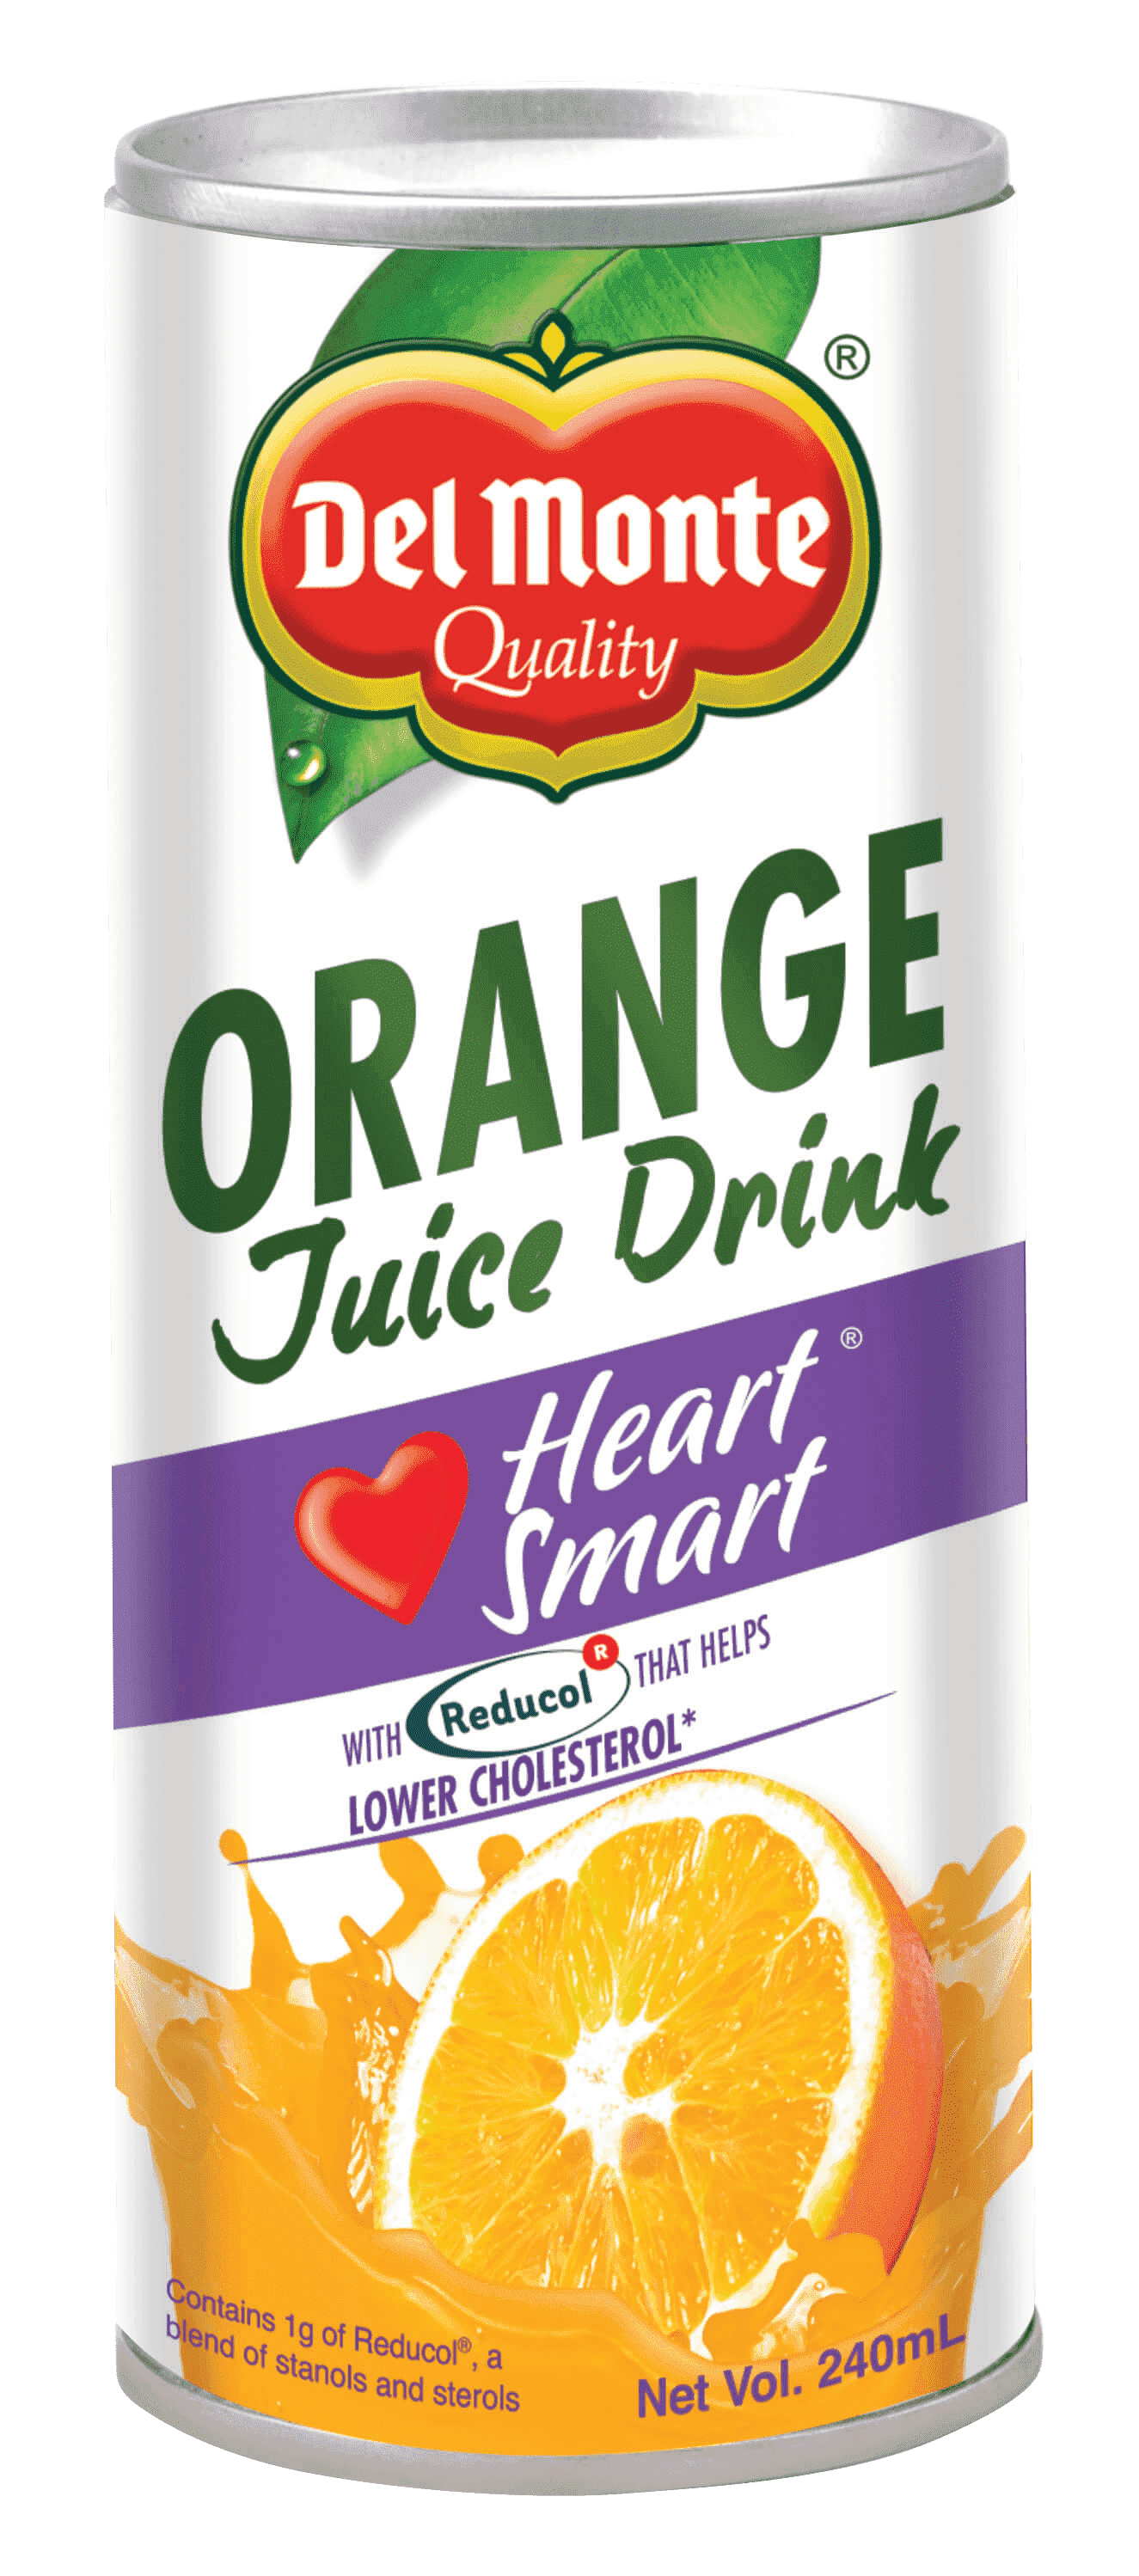 Del Monte Orange Juice Drink Heart Smart